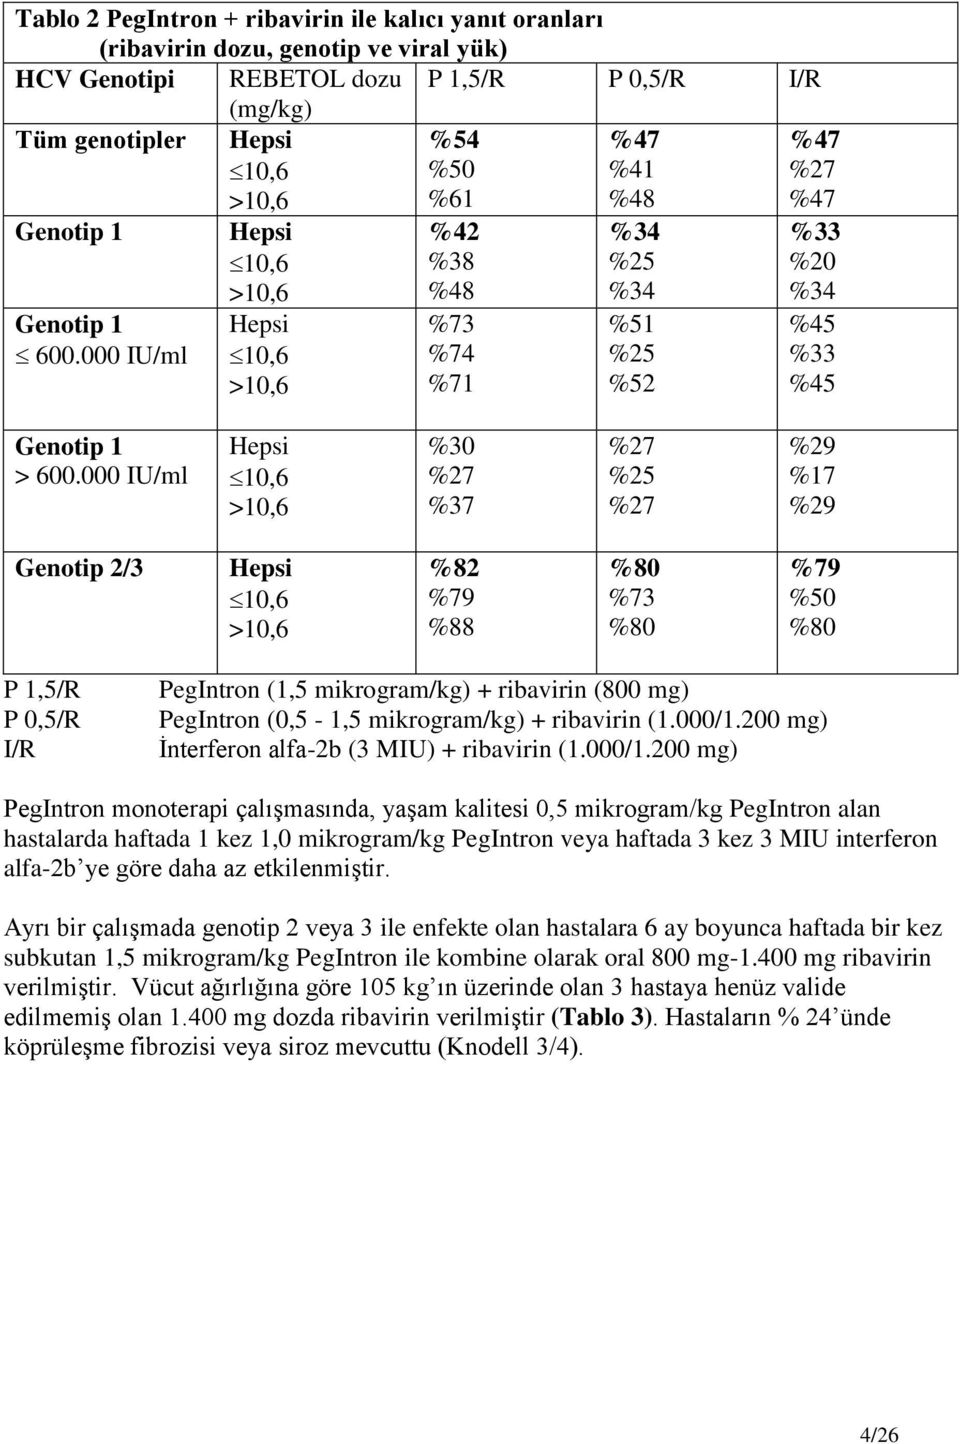 000 IU/ml Hepsi 10,6 >10,6 %30 %27 %37 %27 %25 %27 %29 %17 %29 Genotip 2/3 Hepsi 10,6 >10,6 %82 %79 %88 %80 %73 %80 %79 %50 %80 P 1,5/R P 0,5/R I/R PegIntron (1,5 mikrogram/kg) + ribavirin (800 mg)